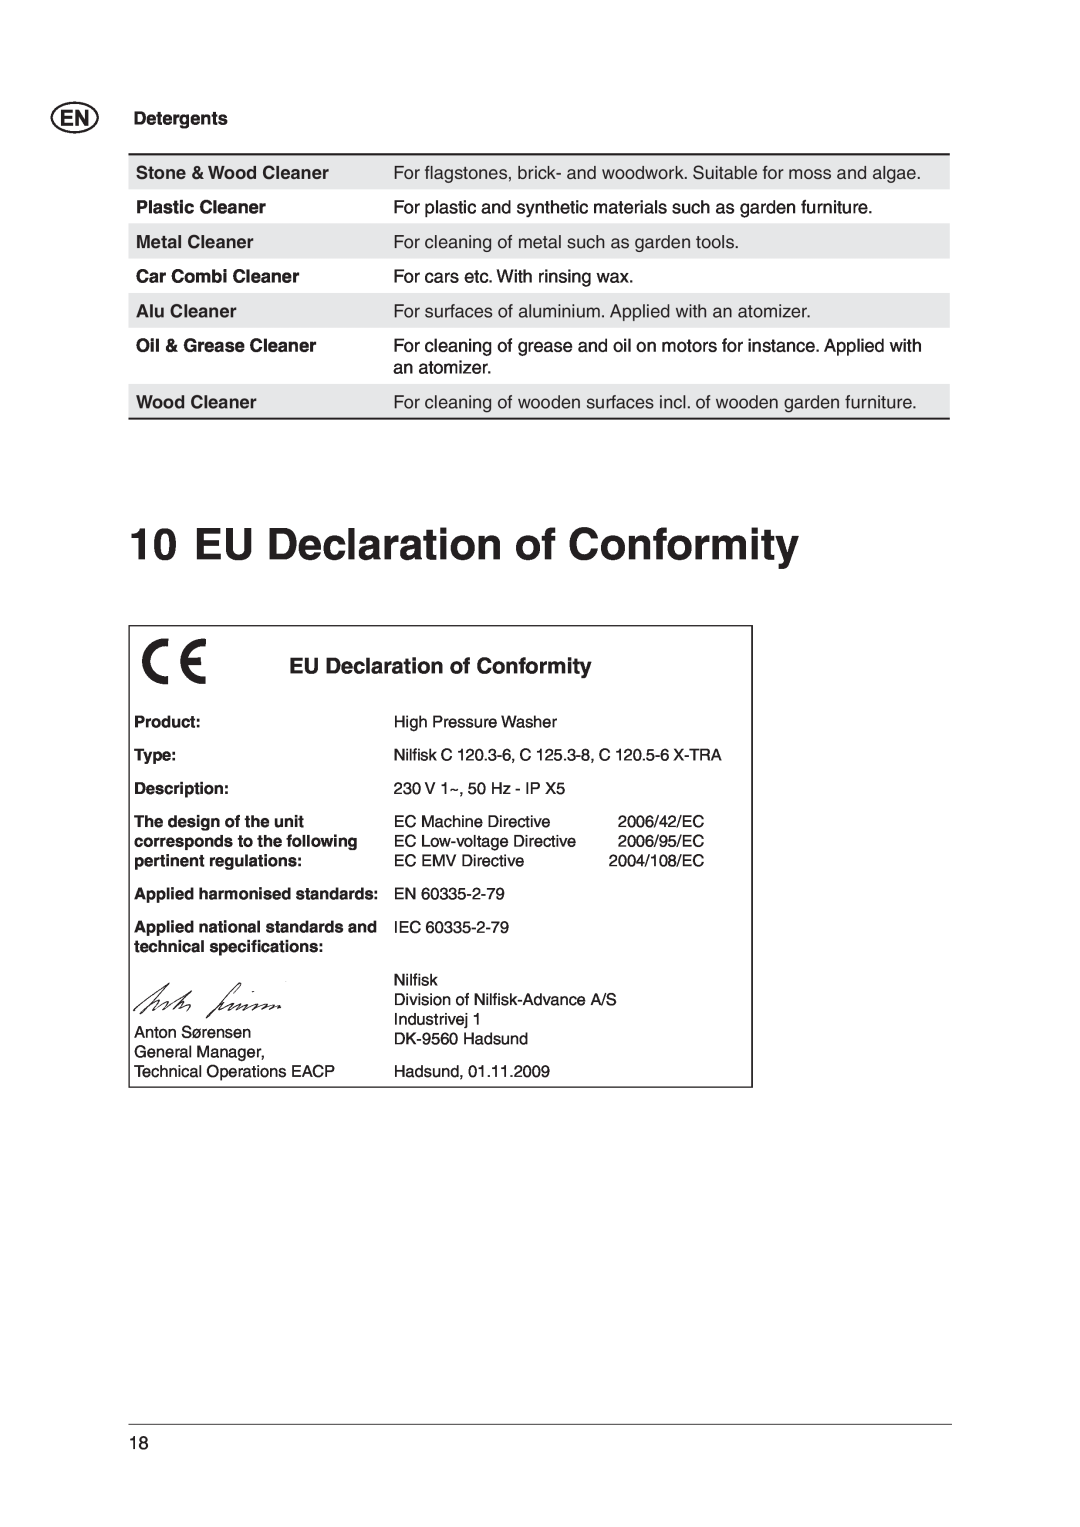 Nilfisk-Advance America C 120.3, C 125.3 EU Declaration of Conformity, Detergents, Stone & Wood Cleaner, Plastic Cleaner 